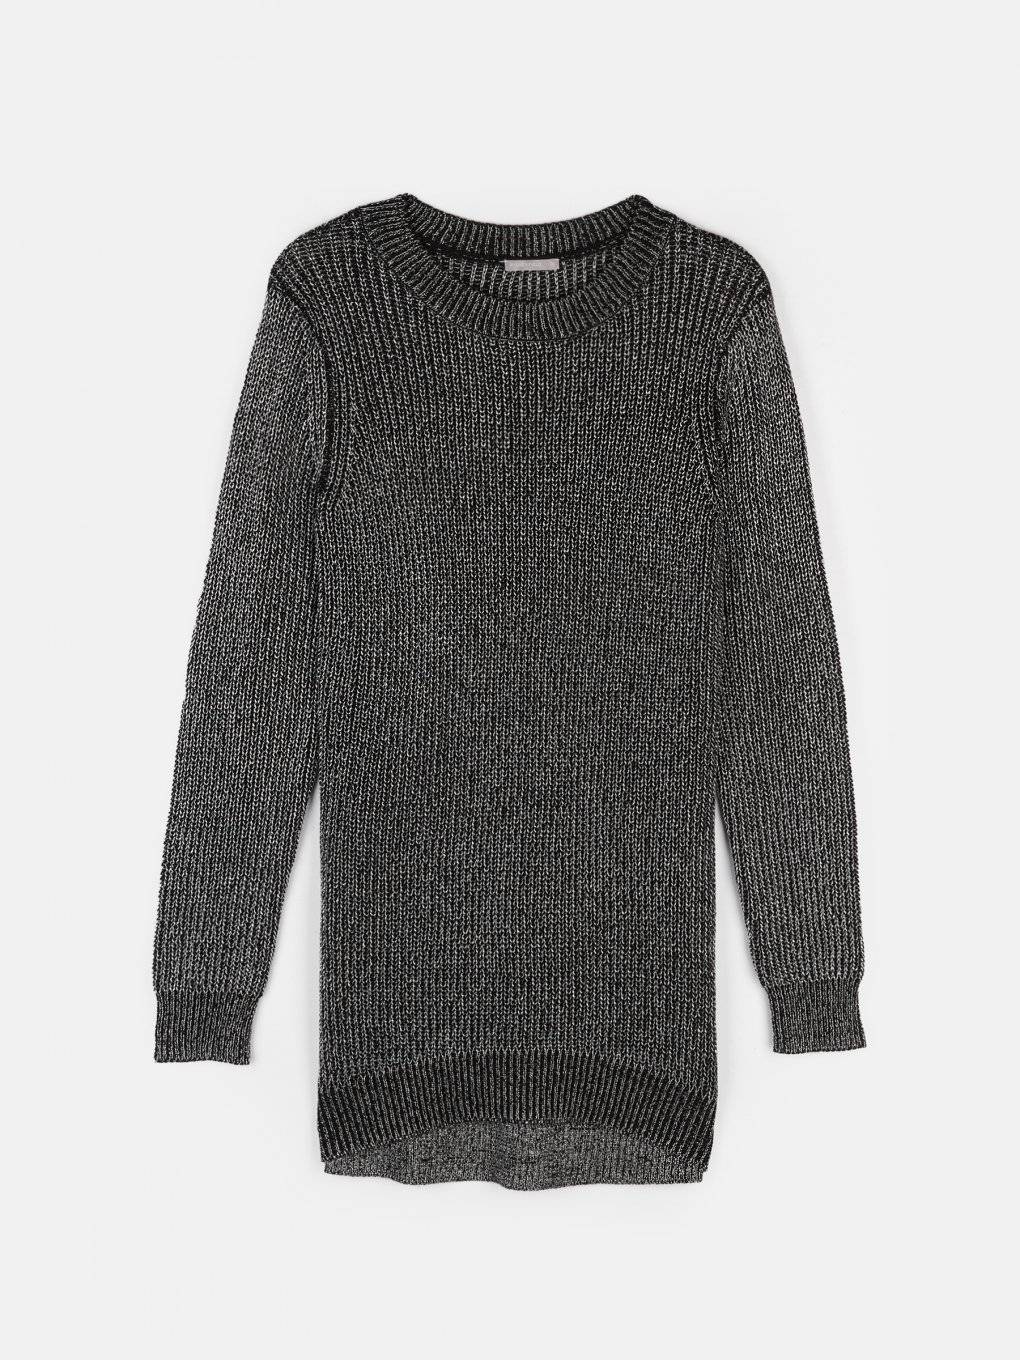 Sweater with metallic fibre